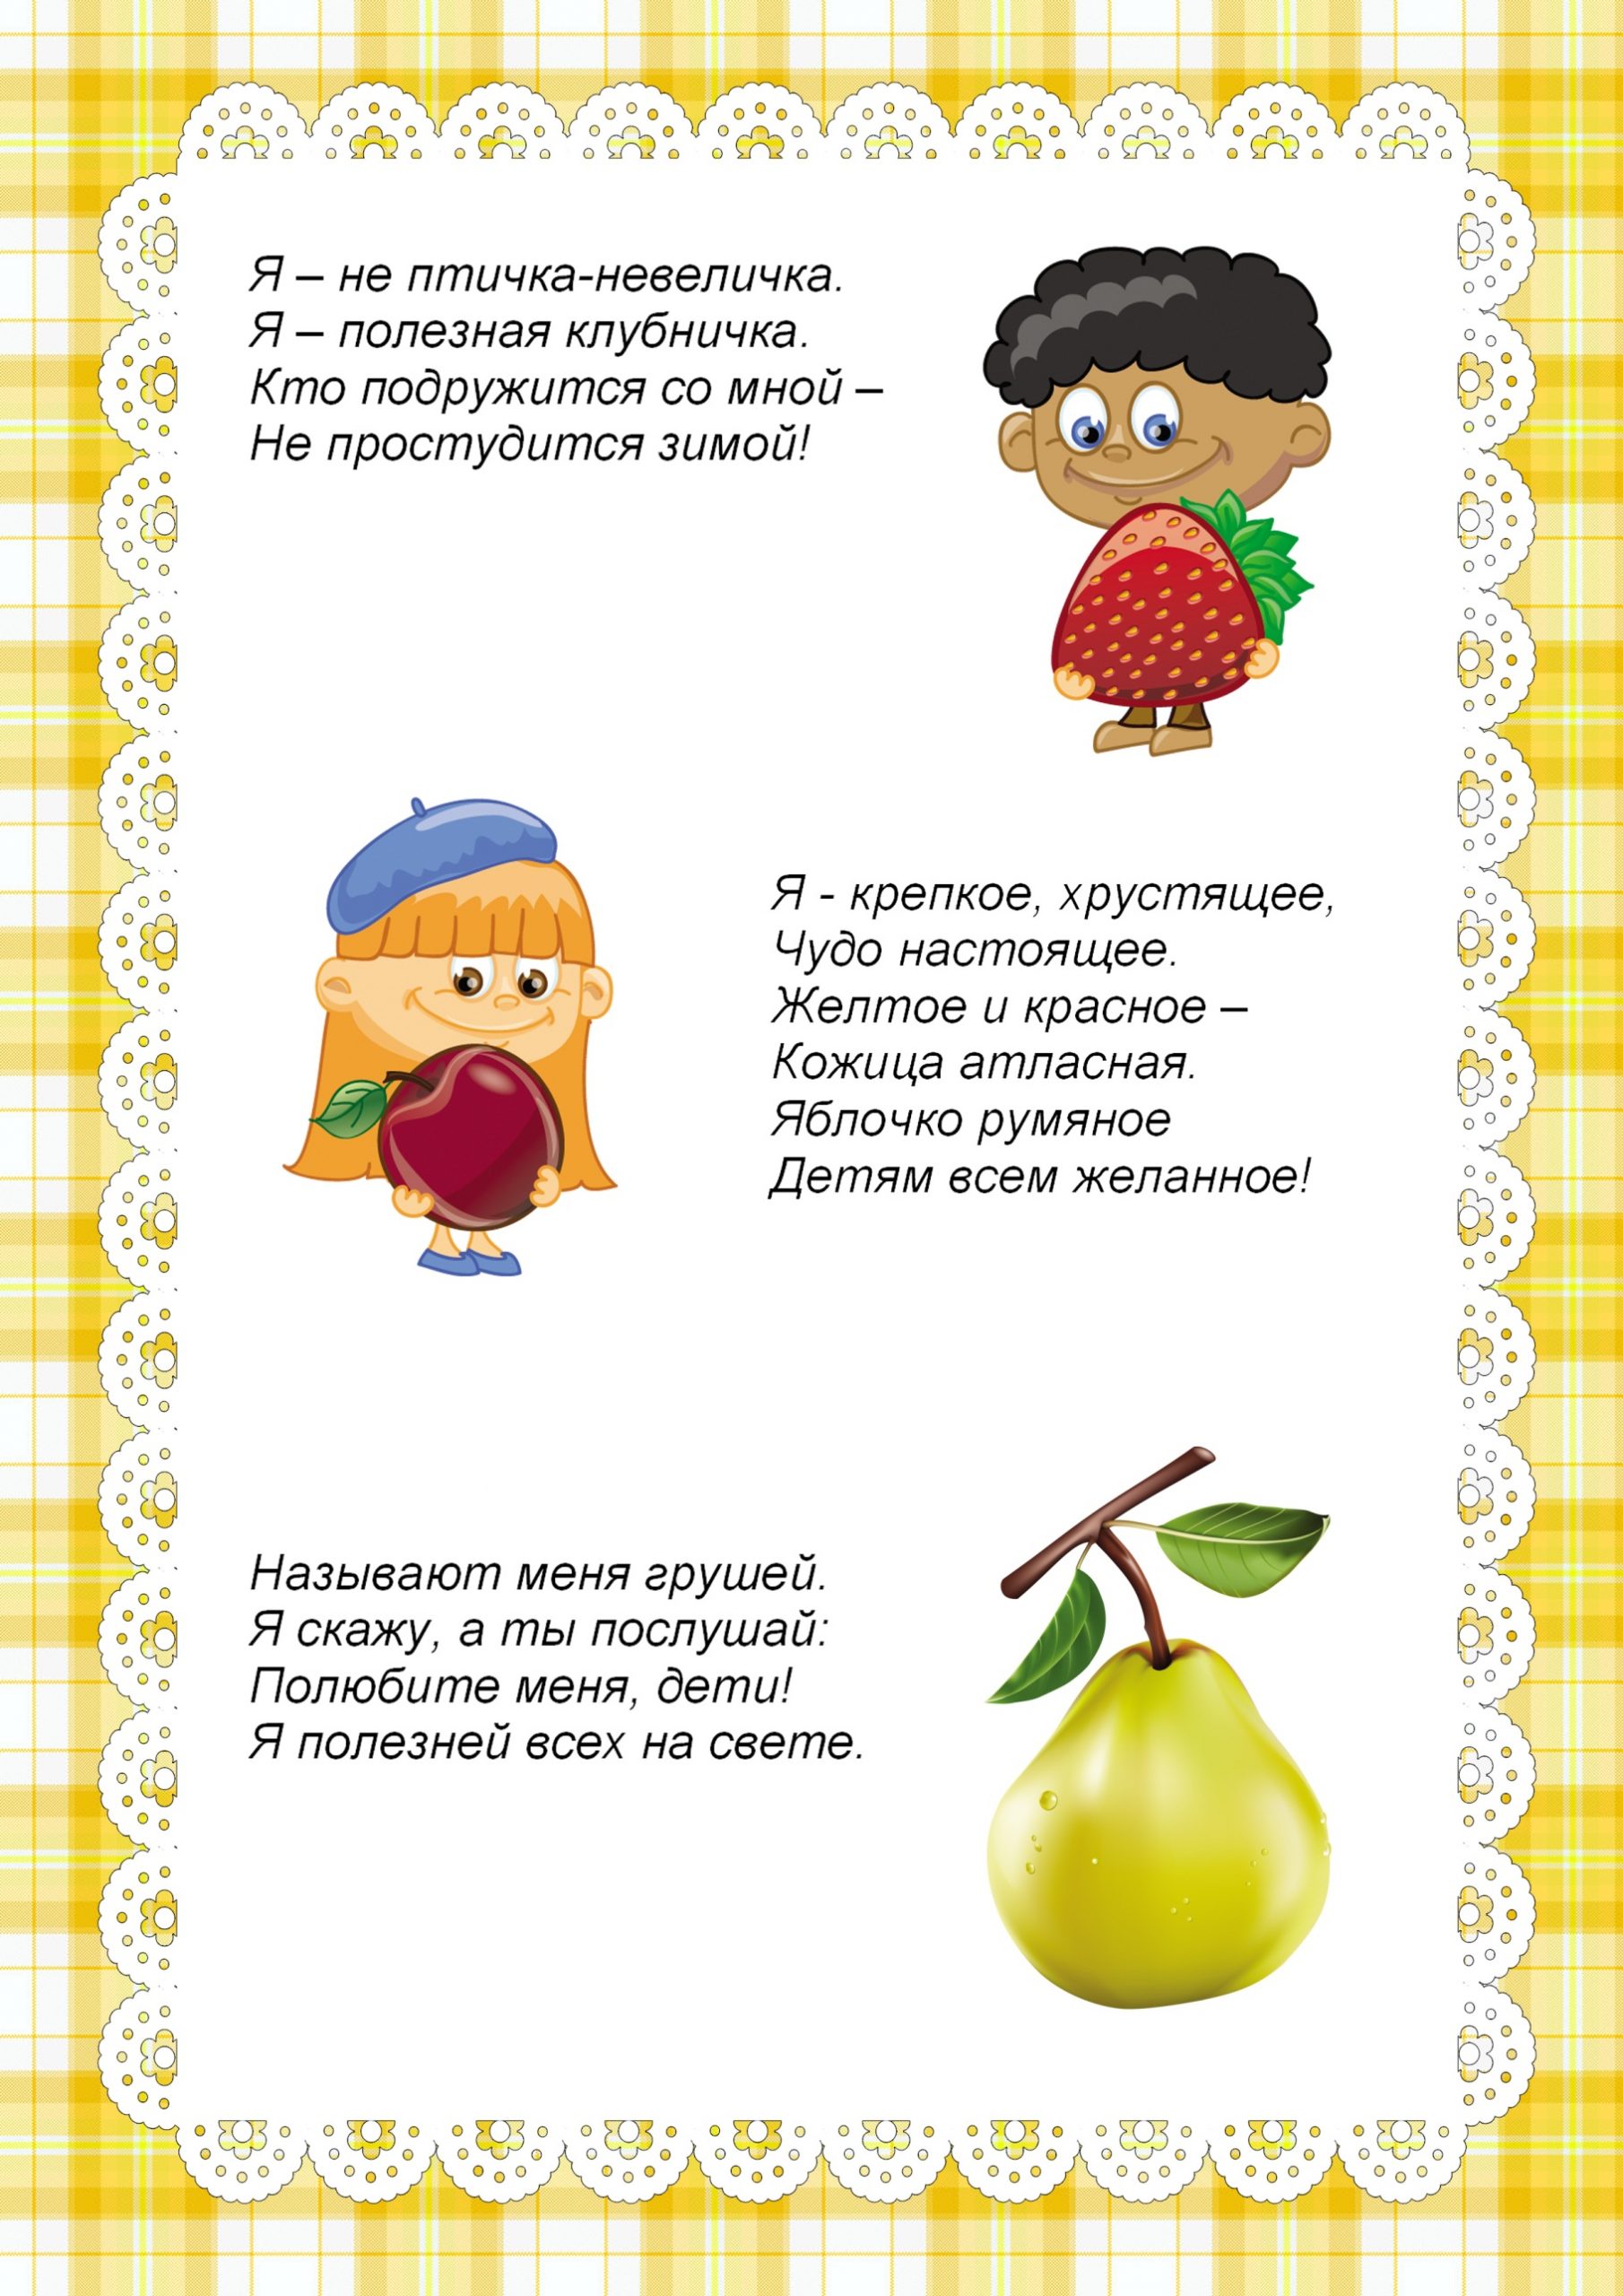 Стихи про витамины. Стихи про витамины в овощах и фруктах для детей. Стихи про овощи и фрукты для детей. Стихотворение про овощи и фрукты для детей. Стихи про фрукты для детей.